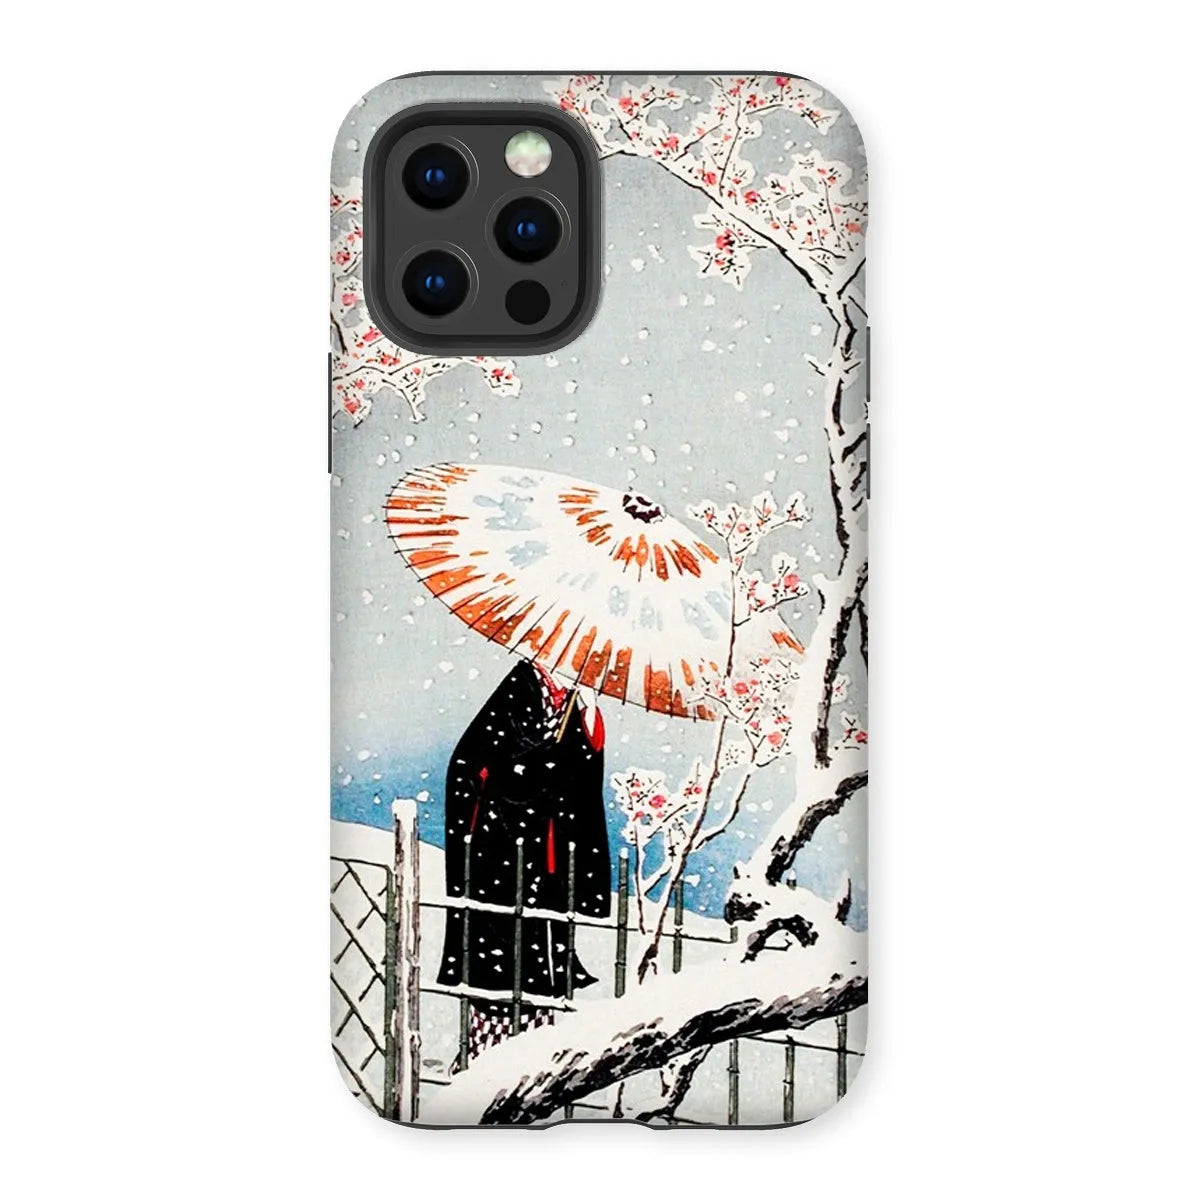 Plum Tree In Snow - Shin-hanga Phone Case - Hiroaki Takahashi - Iphone 12 Pro / Matte - Mobile Phone Cases - Aesthetic